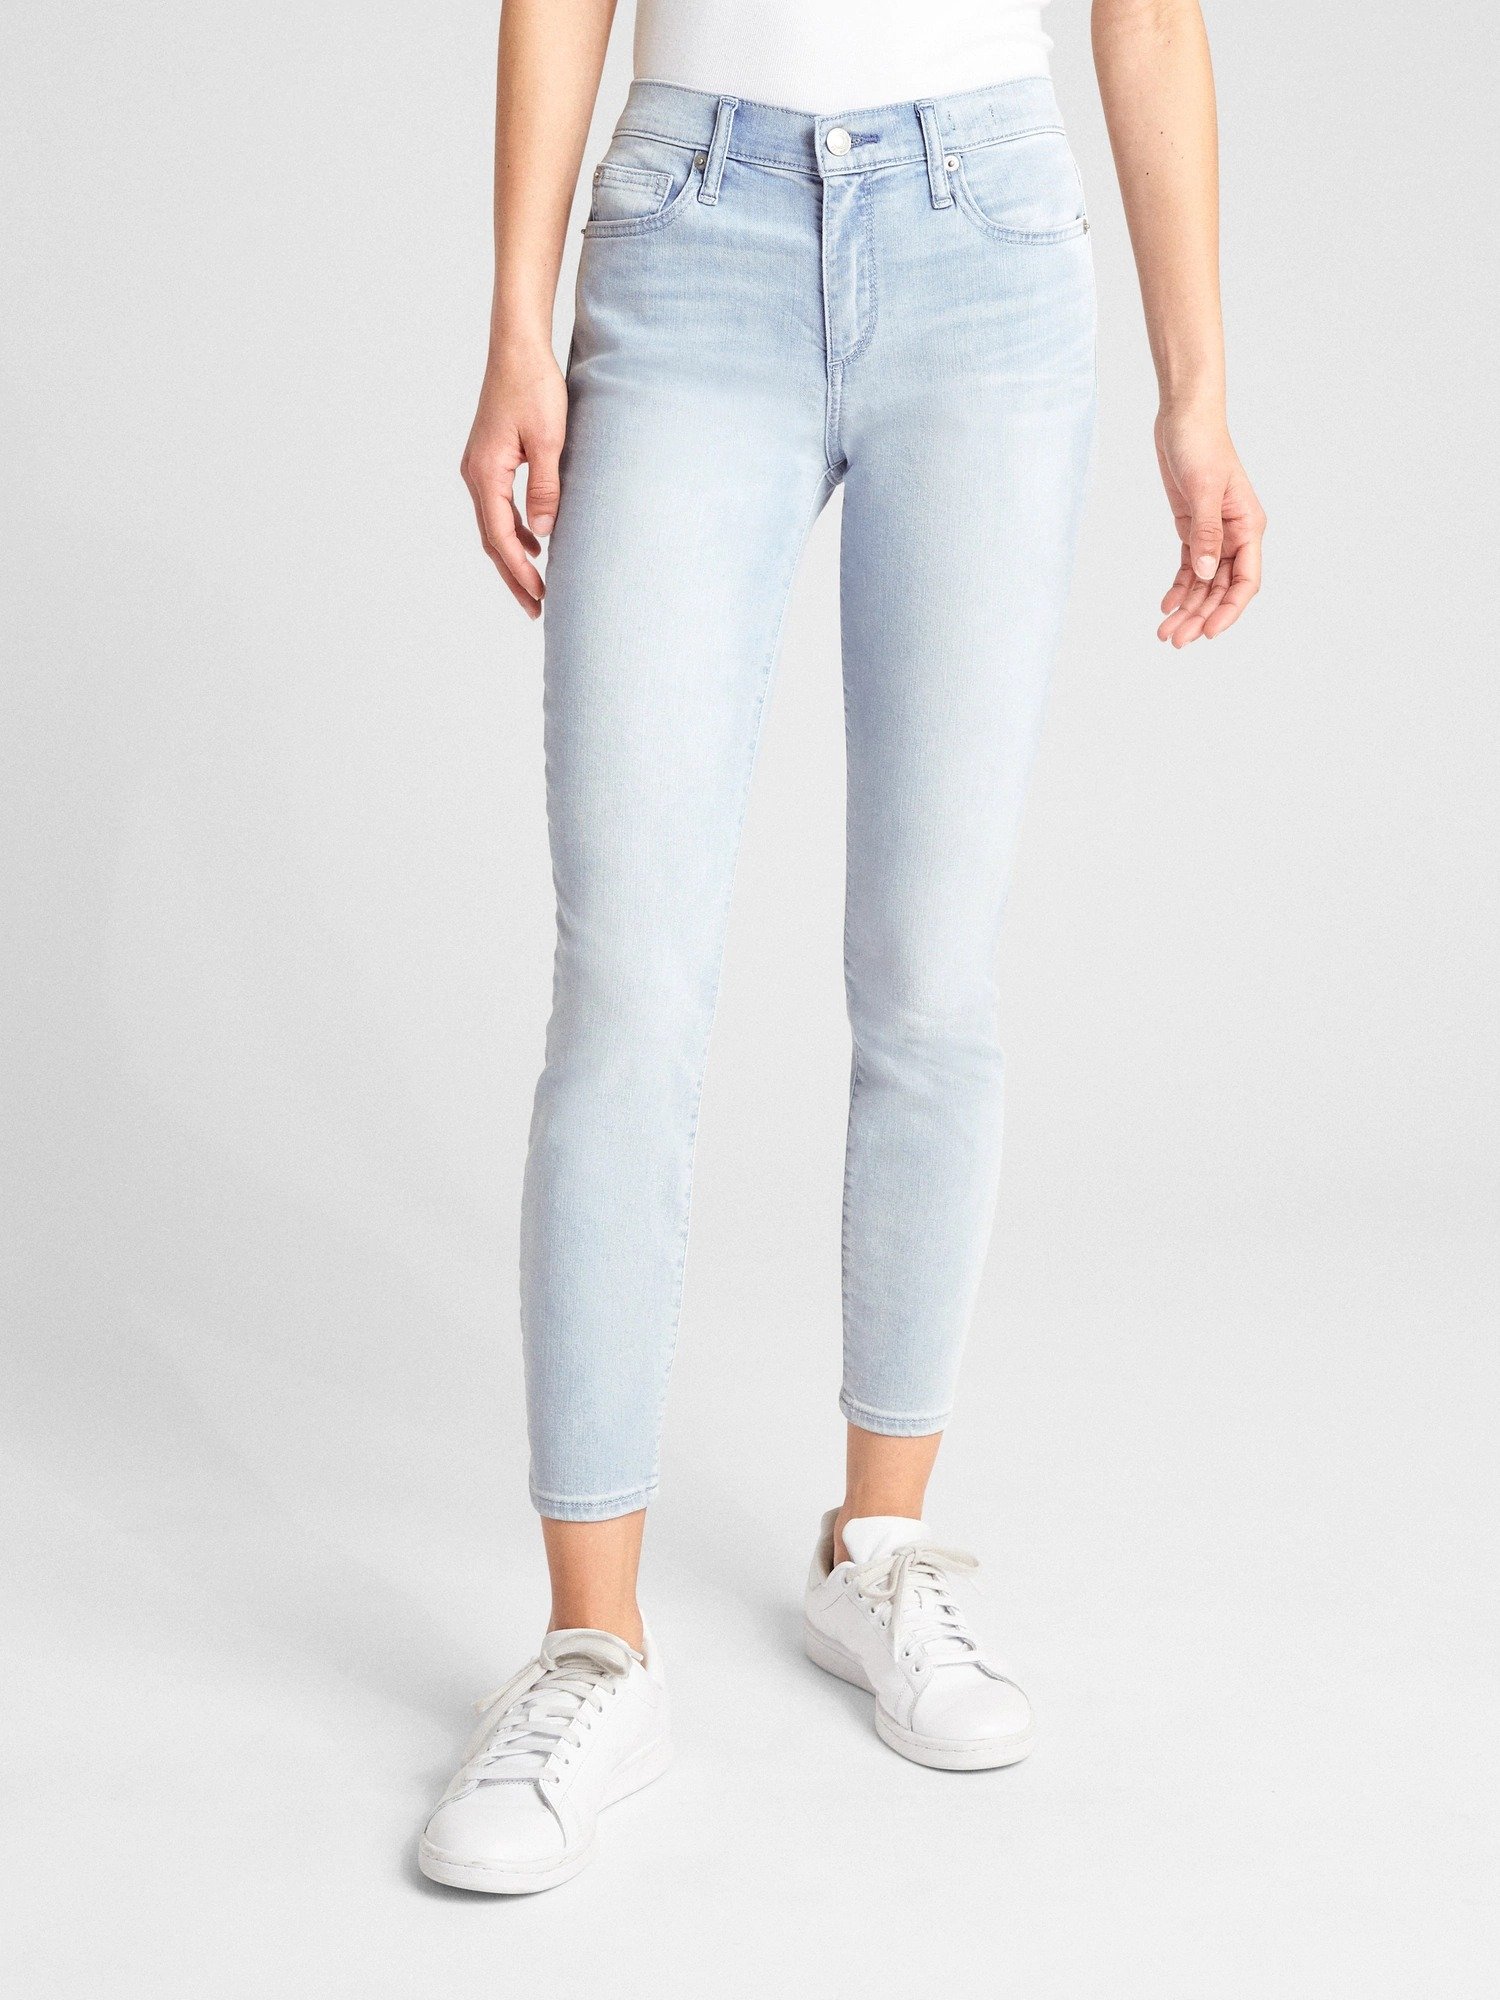 Wearlight orta belli true skinny jean pantolon product image